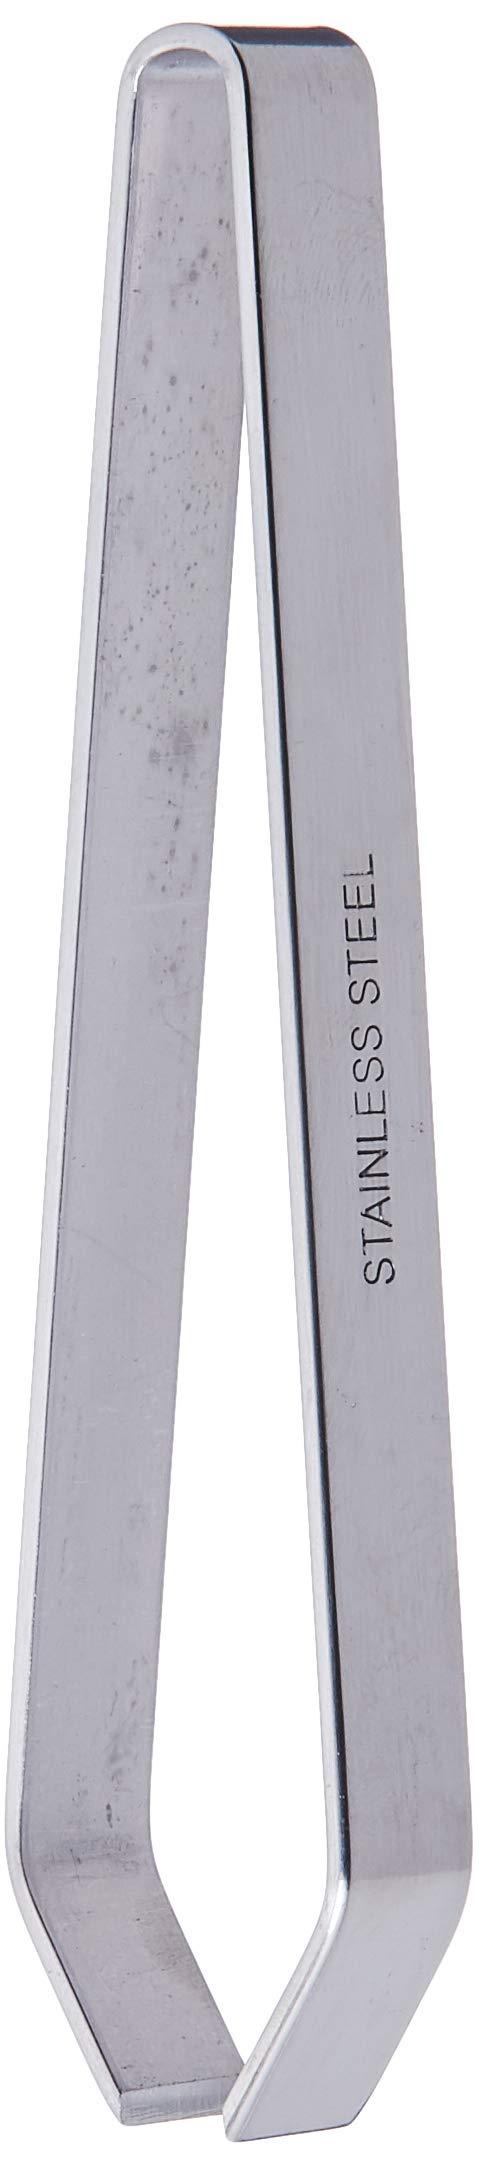 [Australia] - HG HGROPE Stainless Steel Fishbone Tweezers 